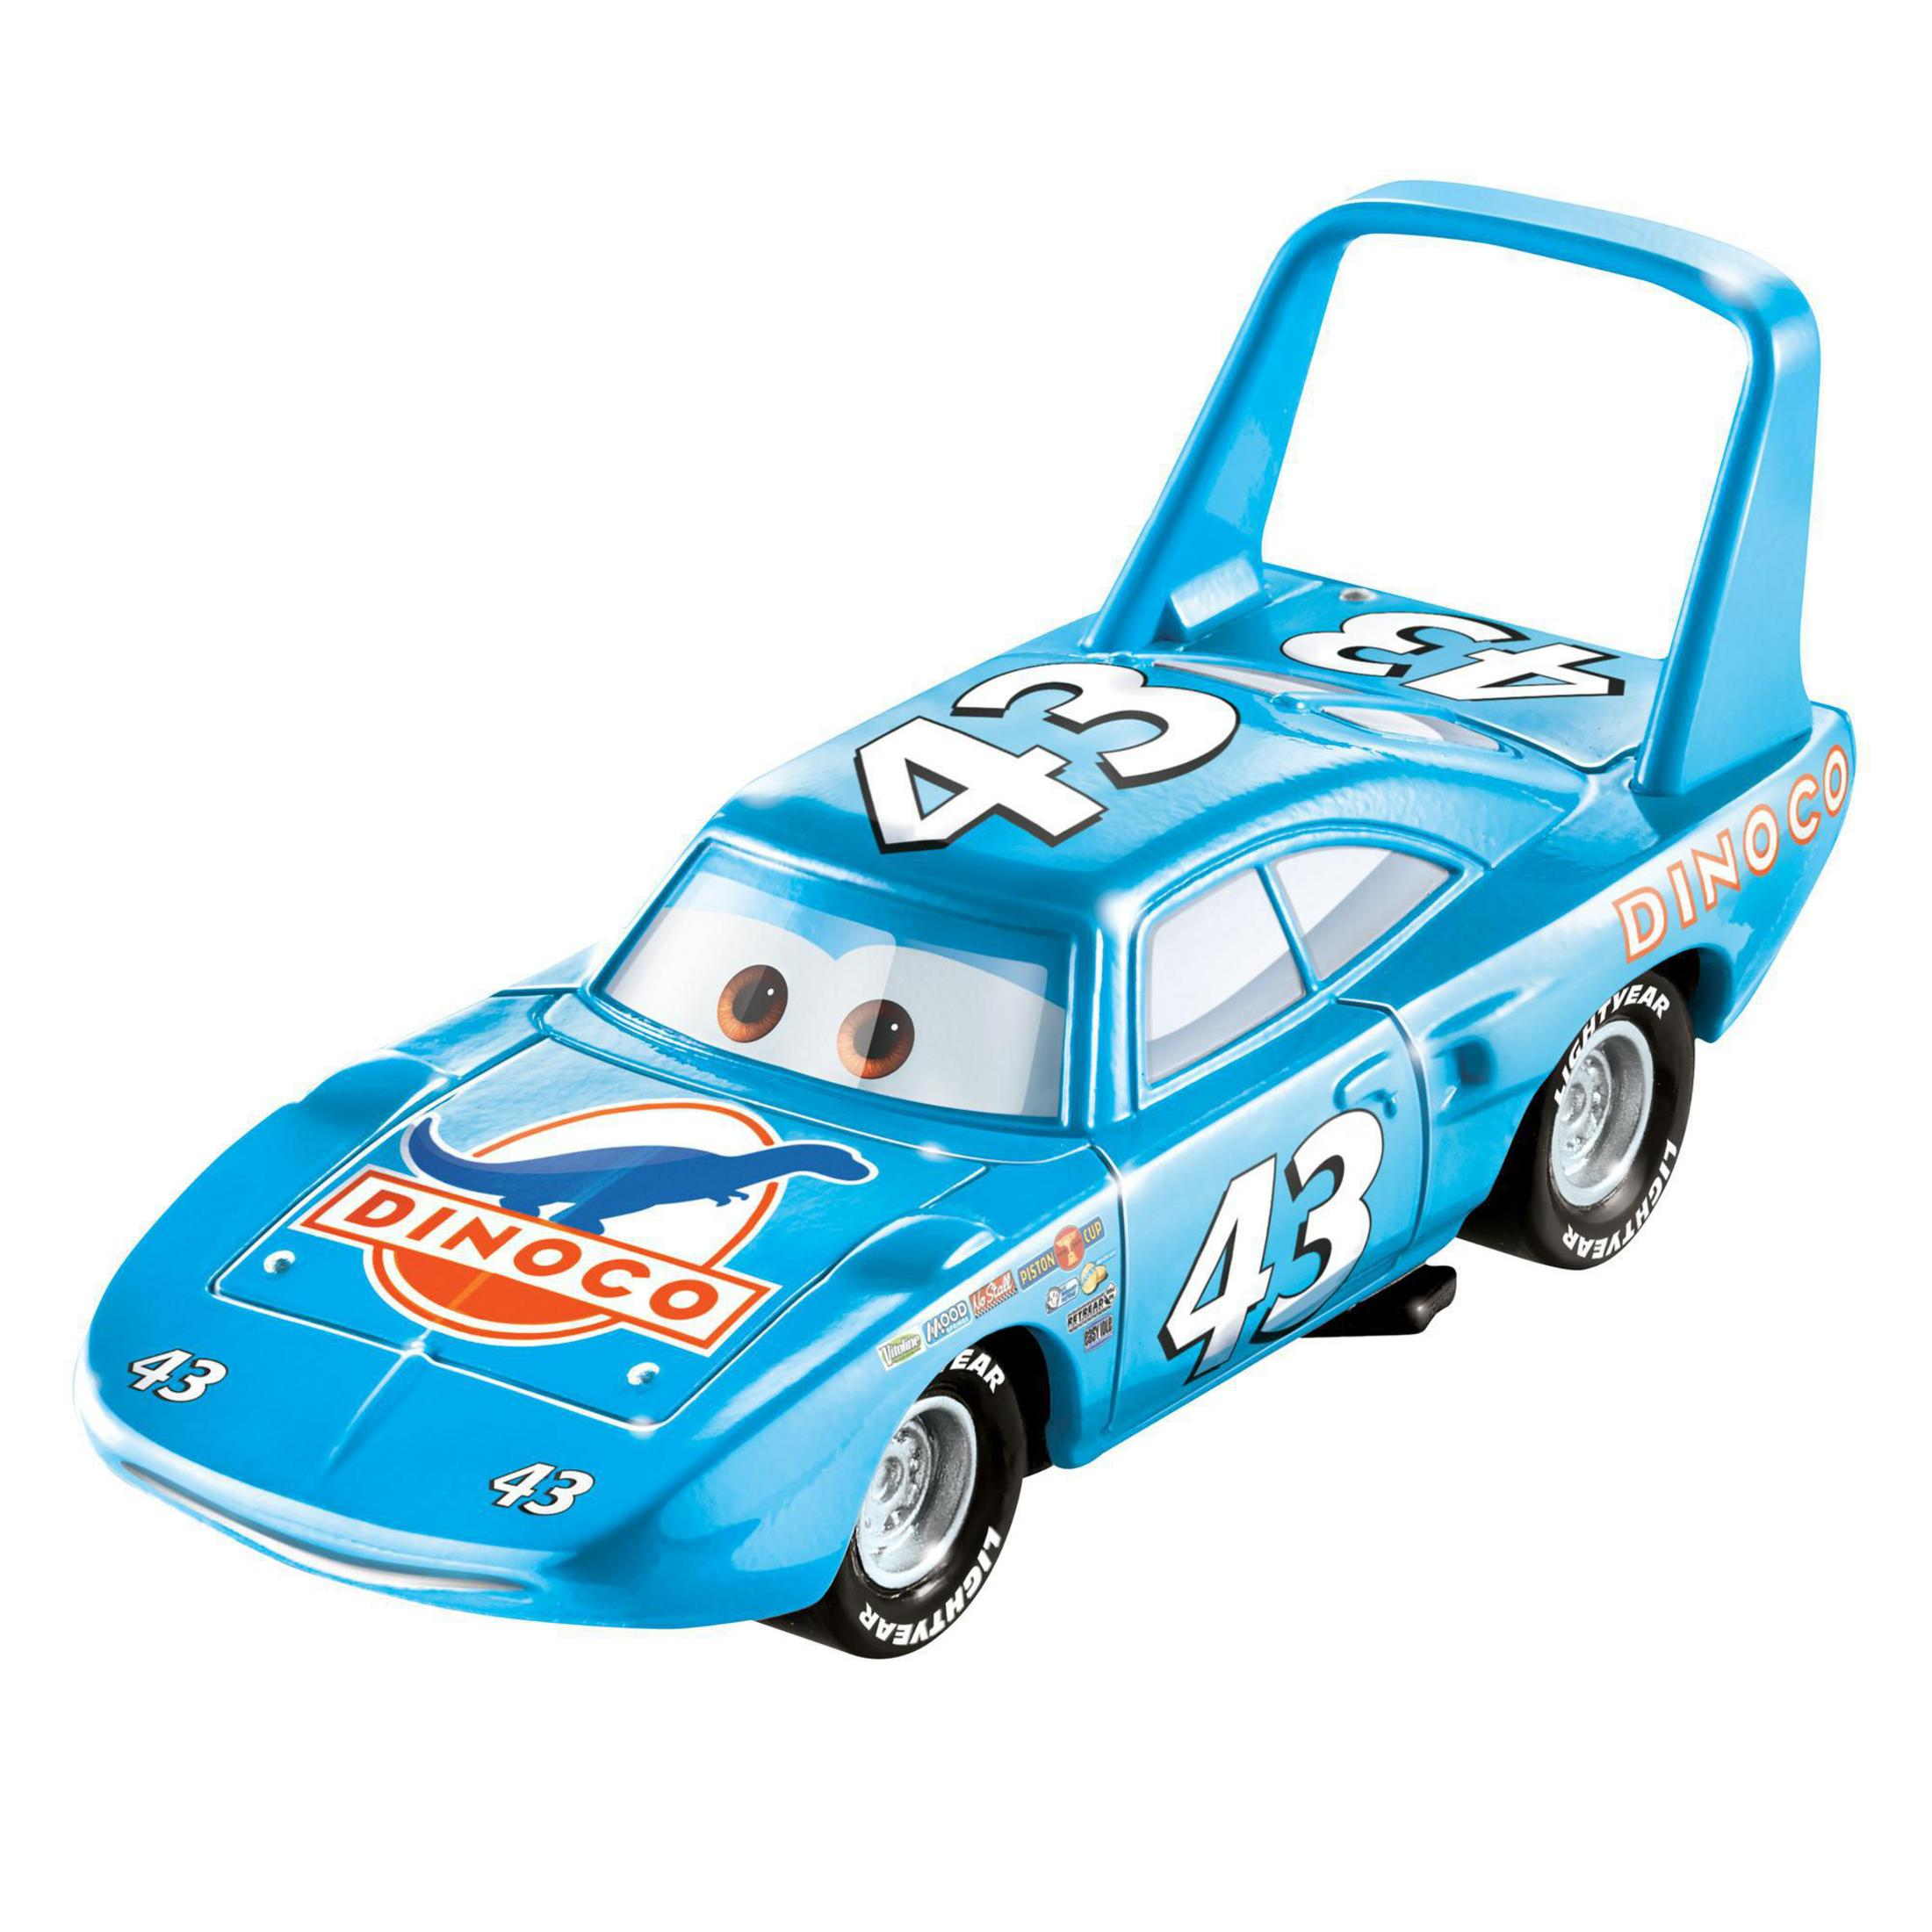 CARS GPB00 FARBWECHSEL FAHRZEUGE SORTIMENT Mehrfarbig Spielzeugauto